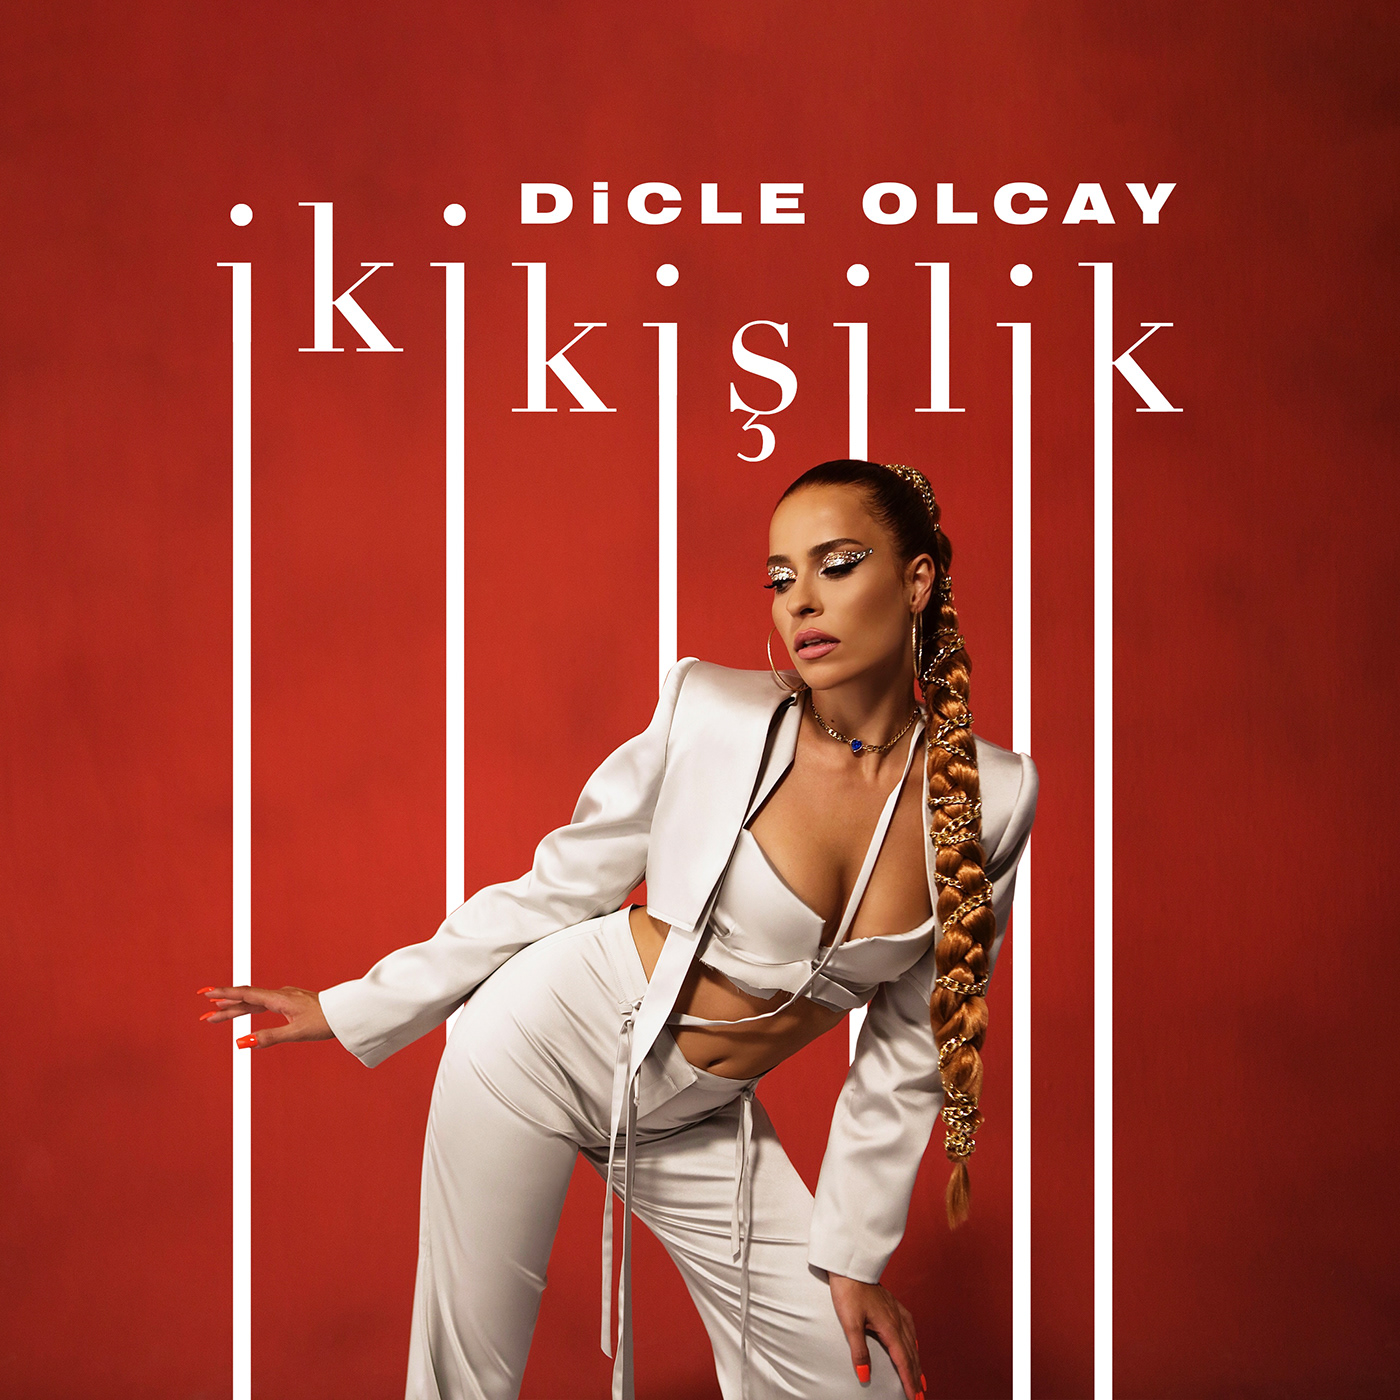 Album Cover Design cover design Dicle olcay graphic design  turkish pop music